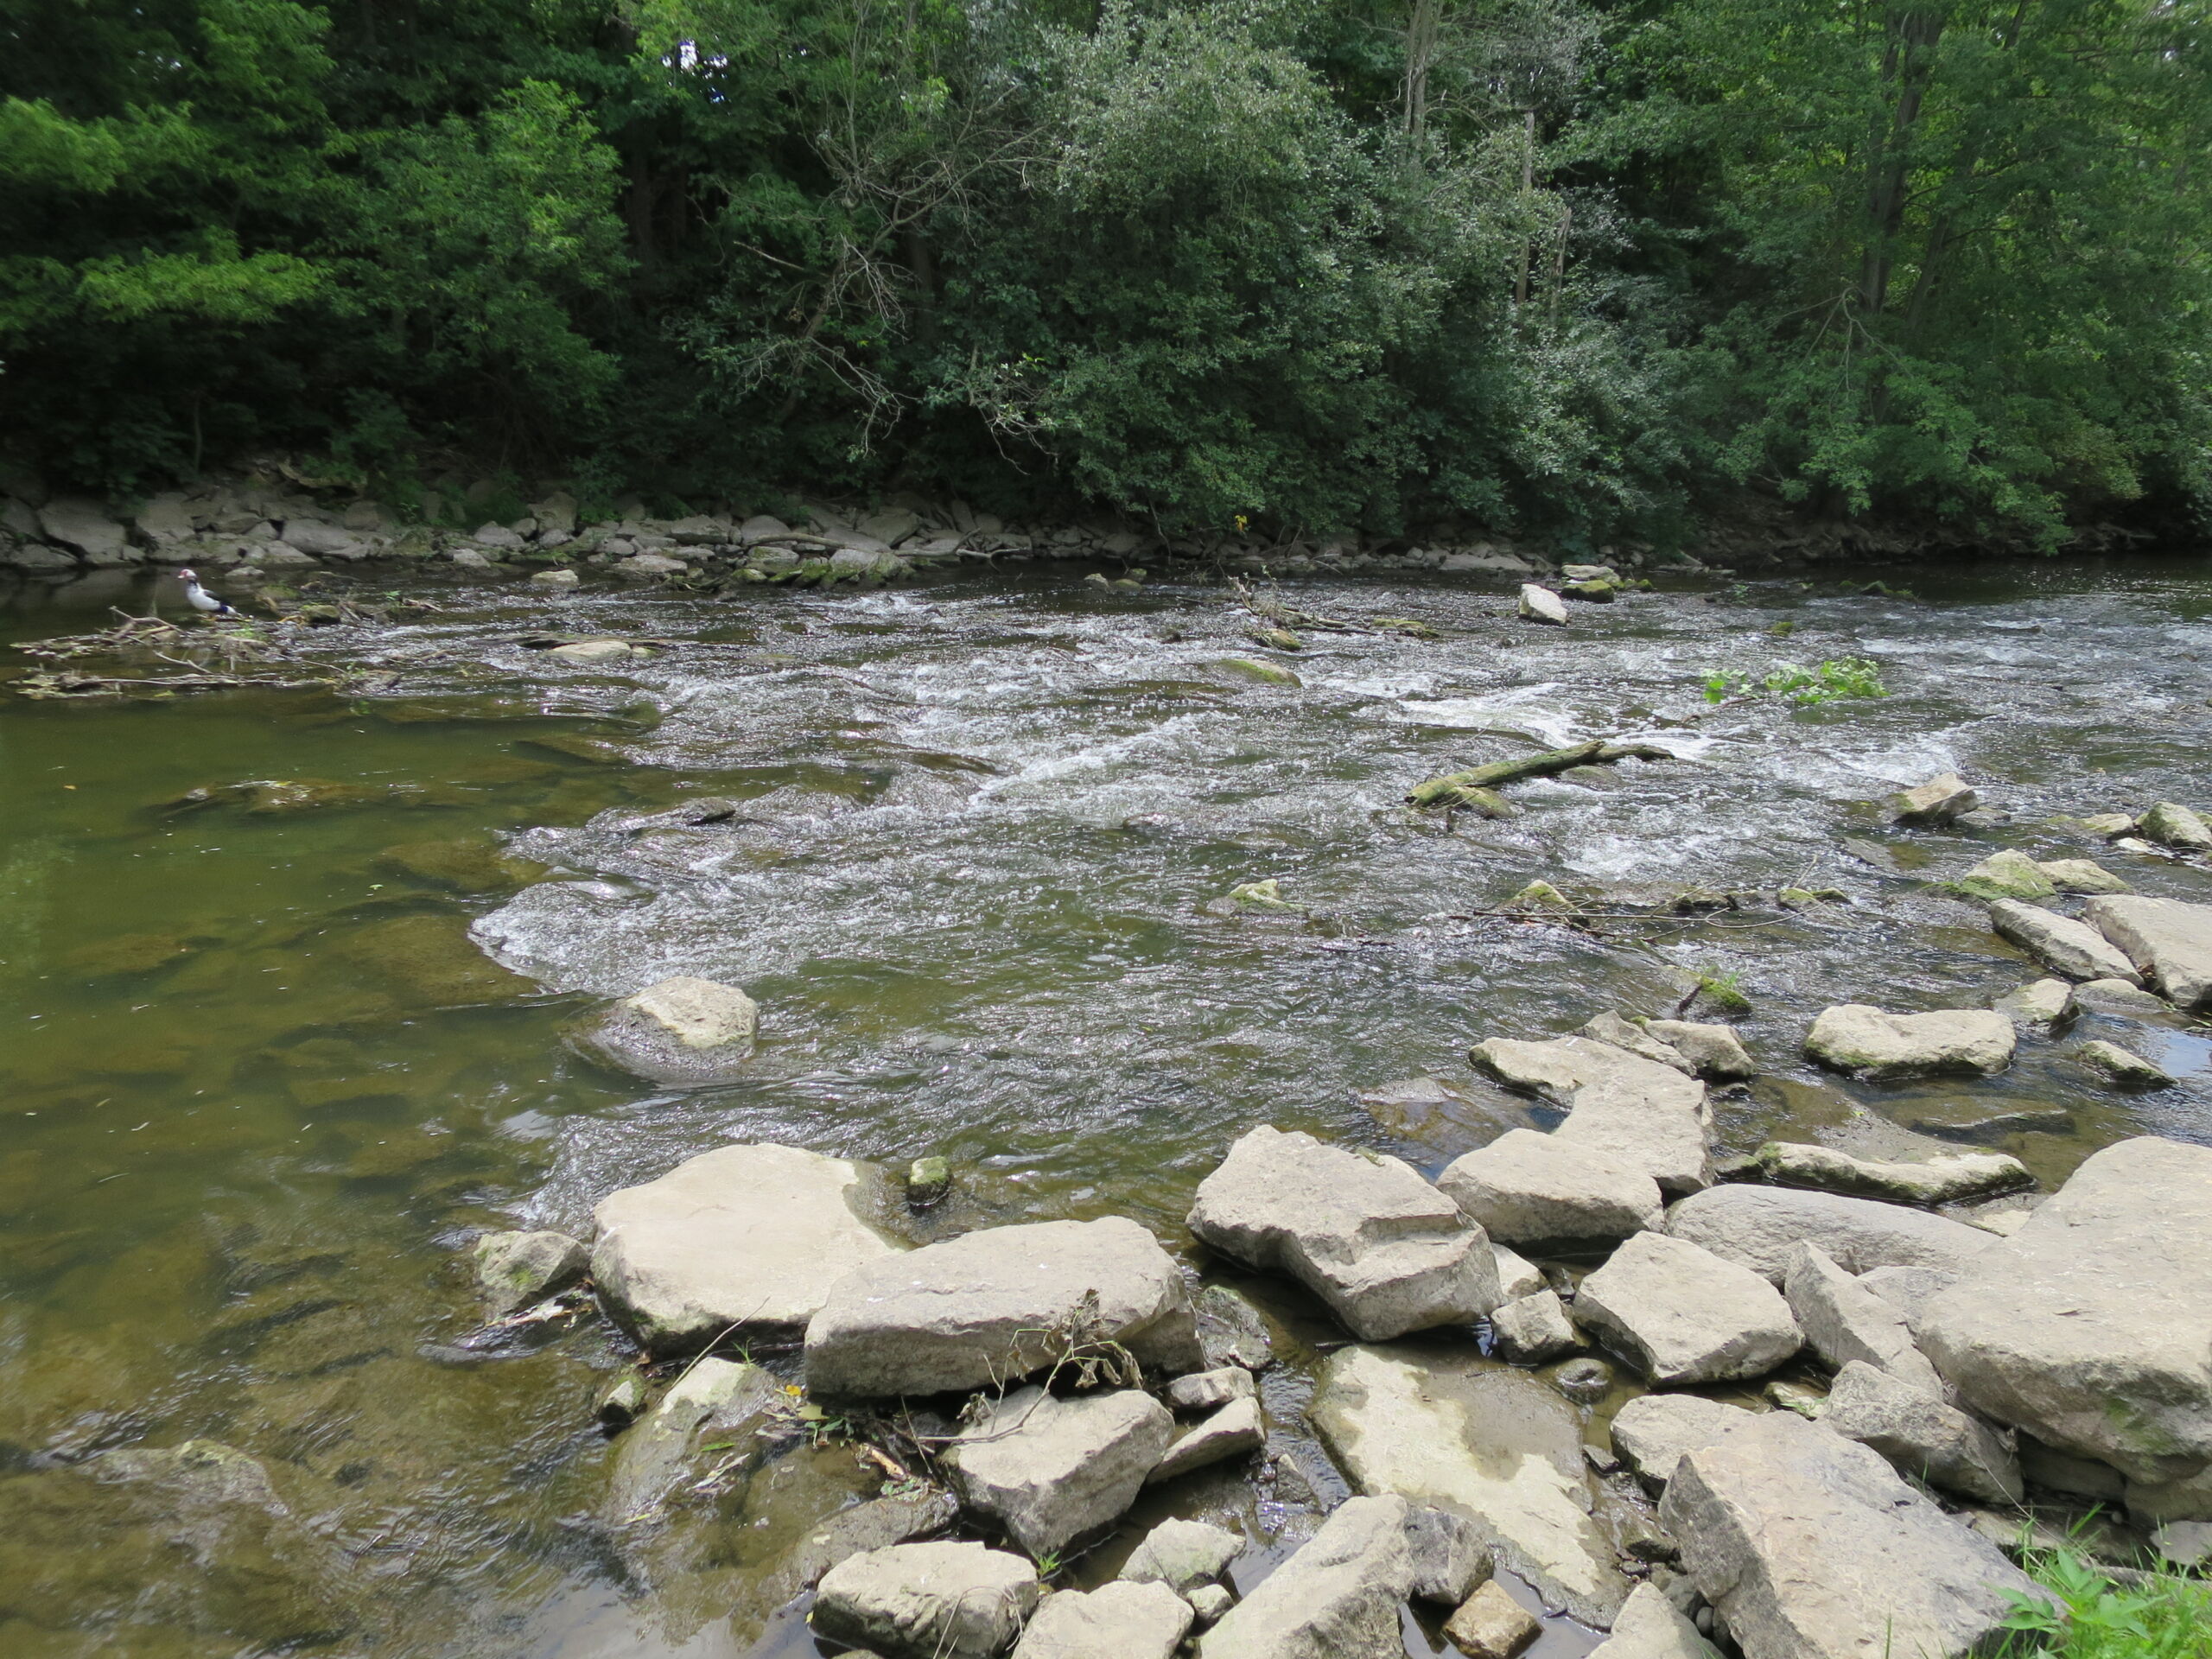 Water cascades over rocks in a stream.